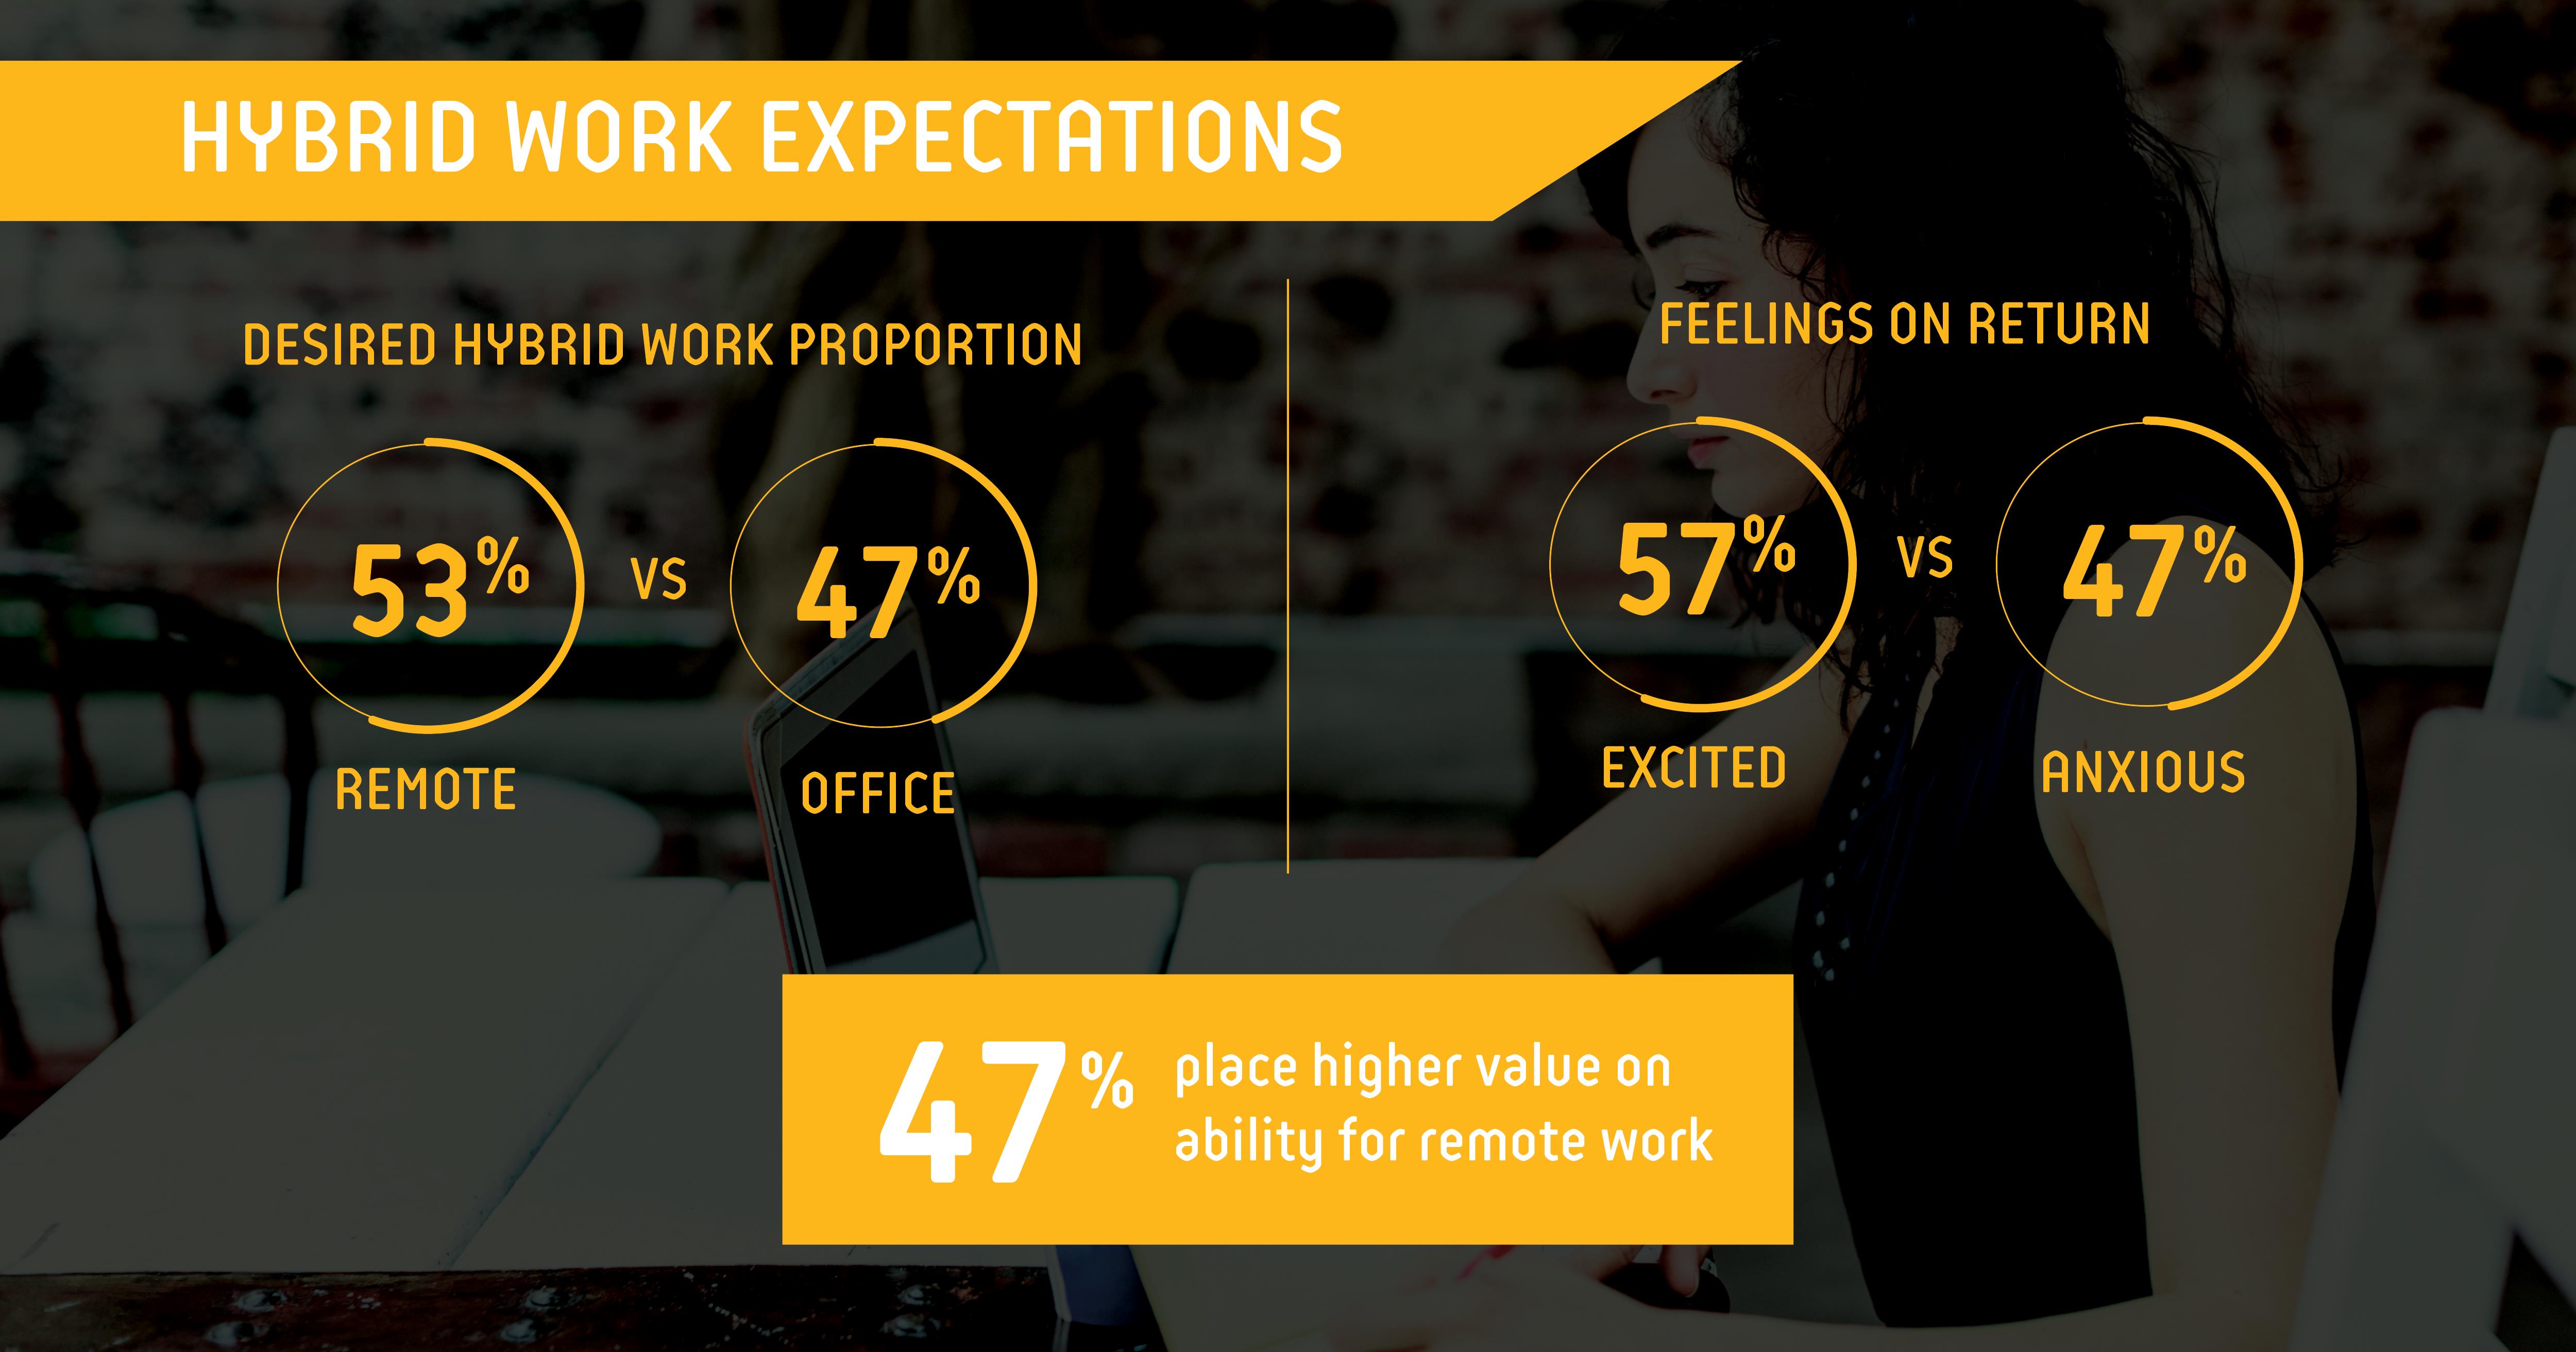 Hybrid work expectation statistics